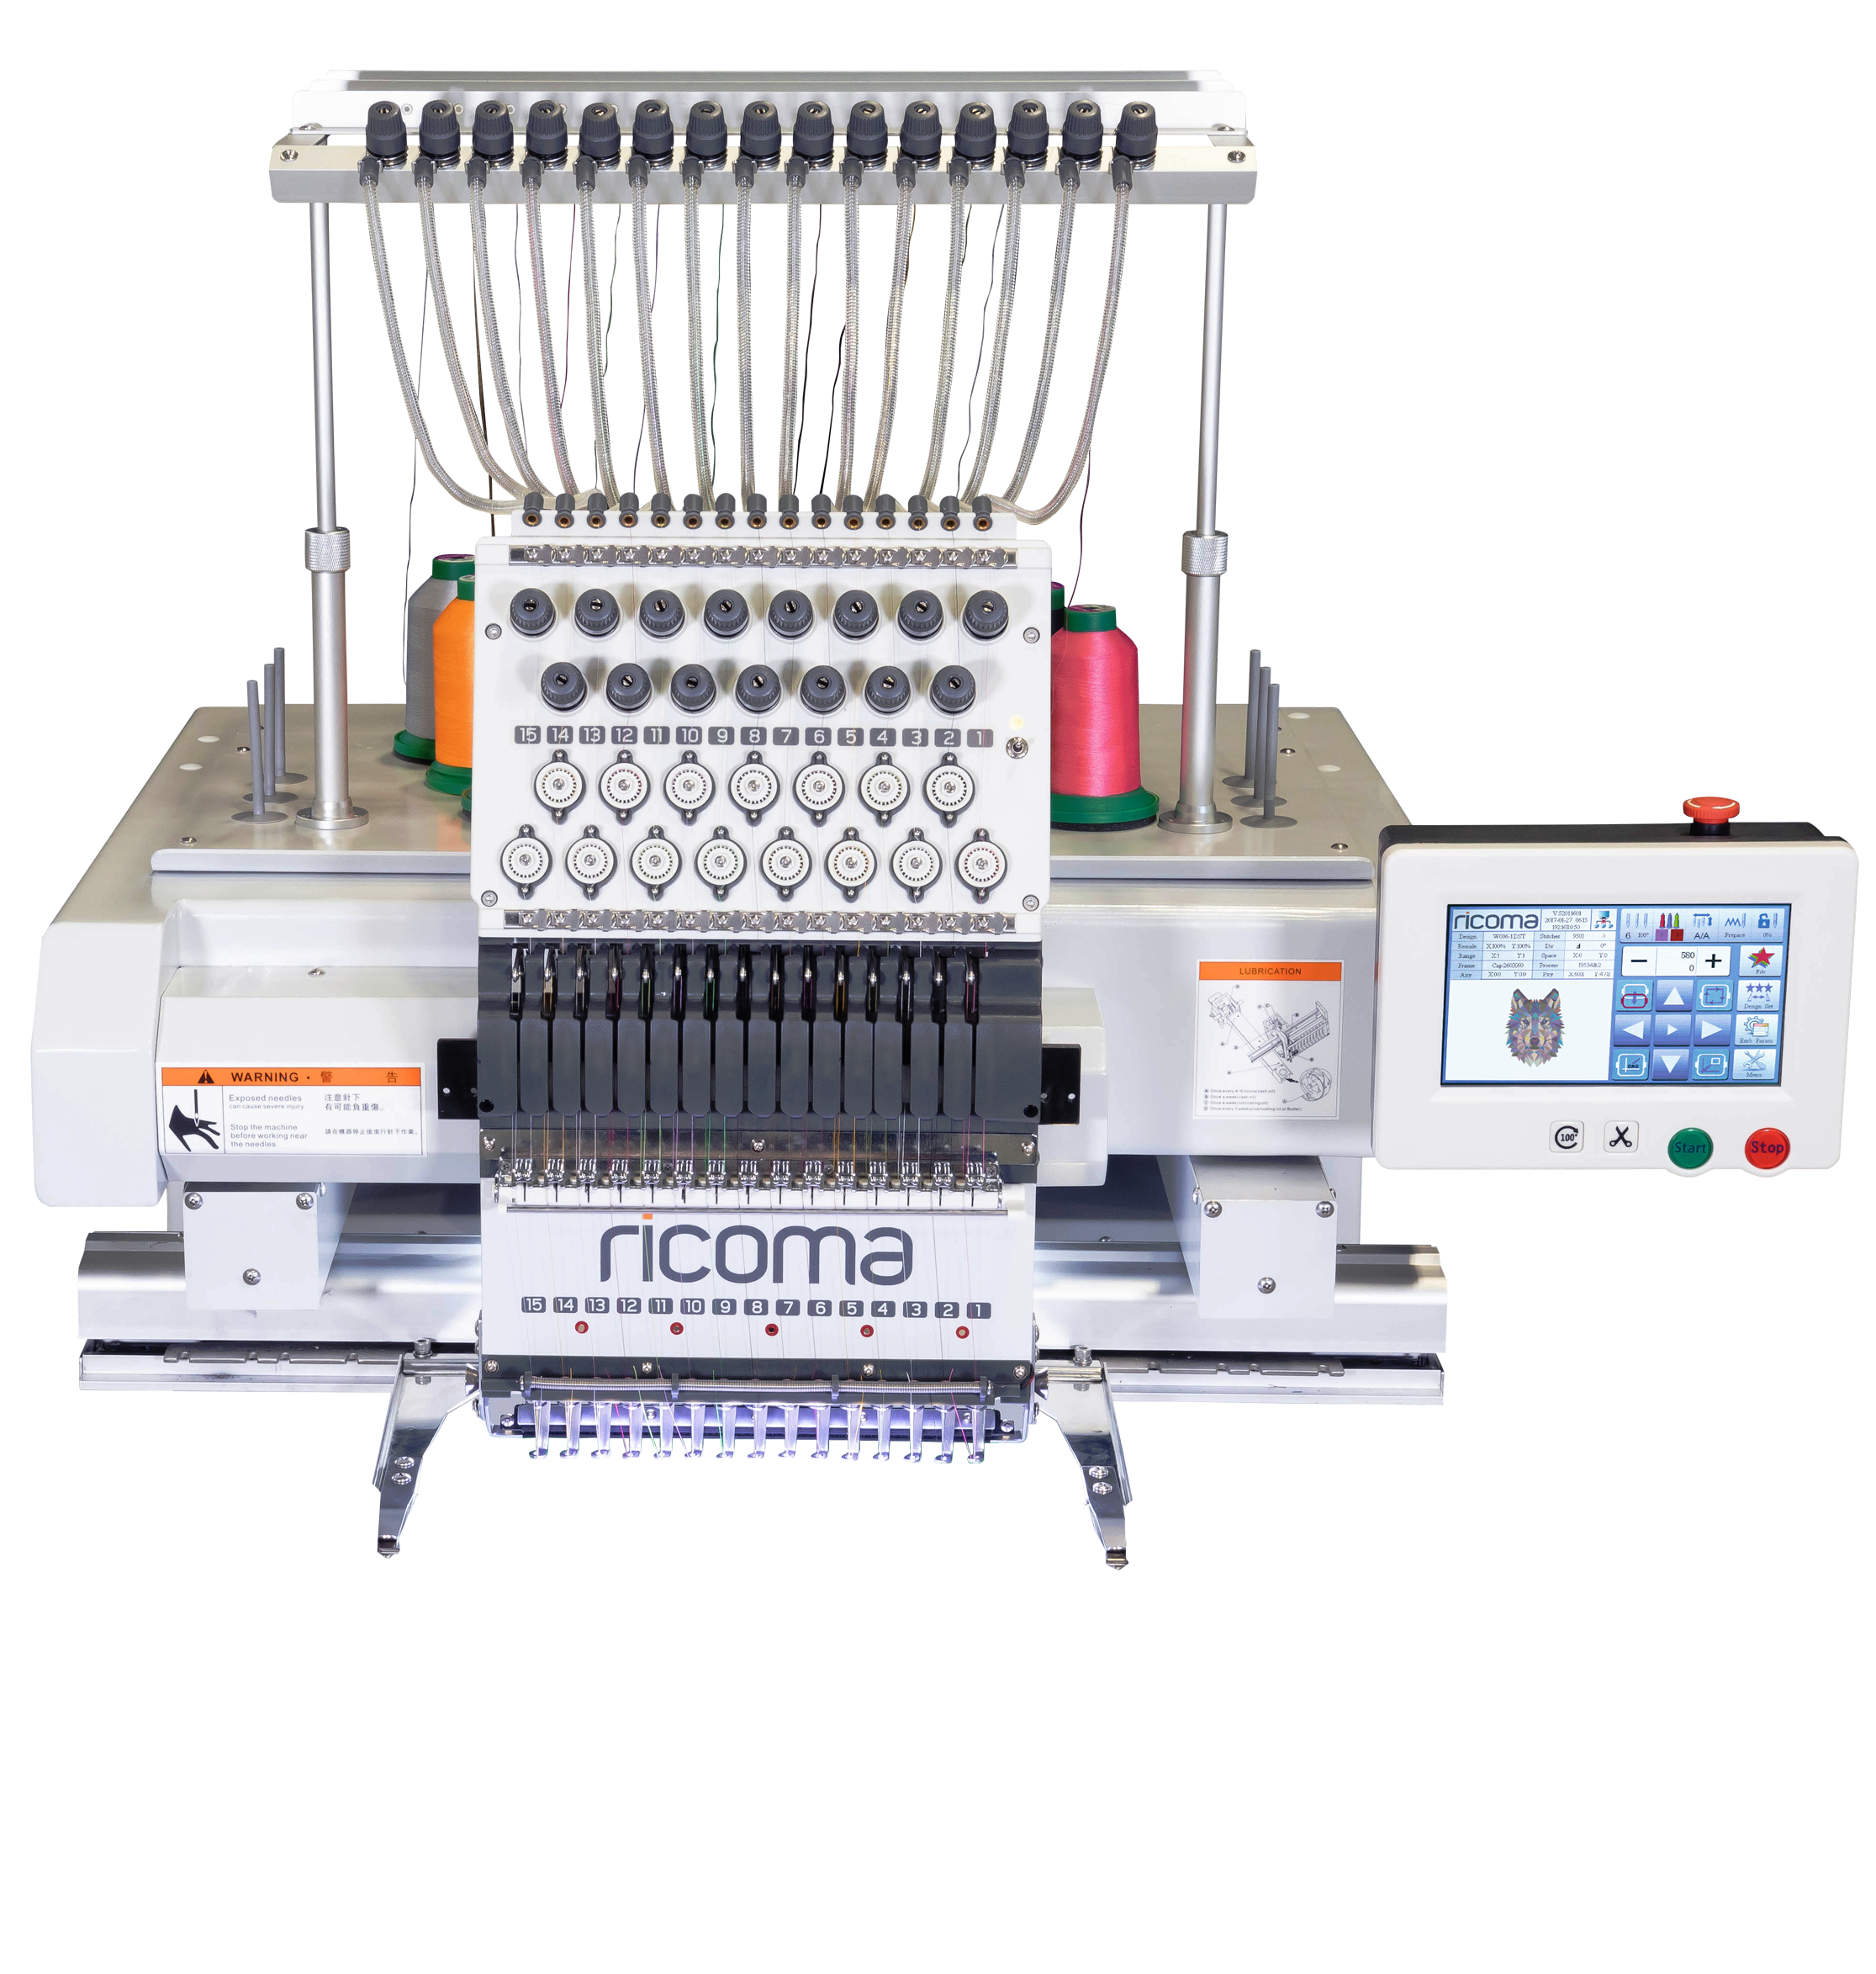 Stickereibedarf - Ricoma,embroidery machine,industrial embroidery machine